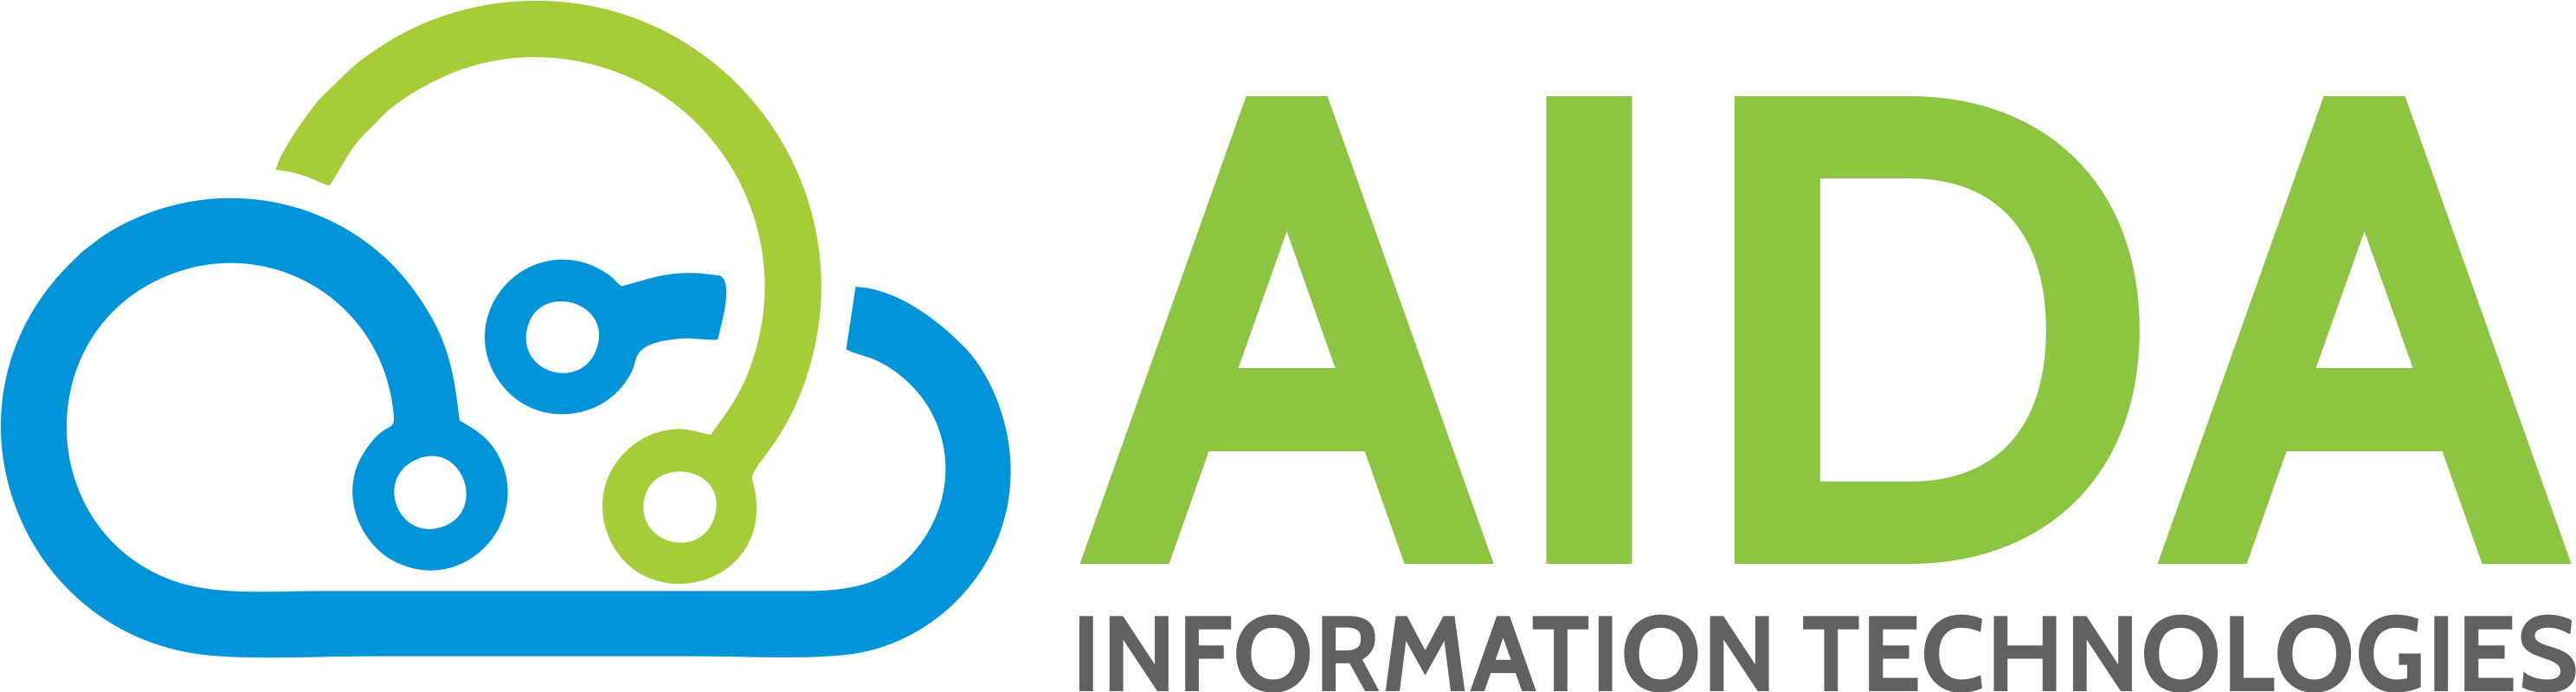 Aida Logo